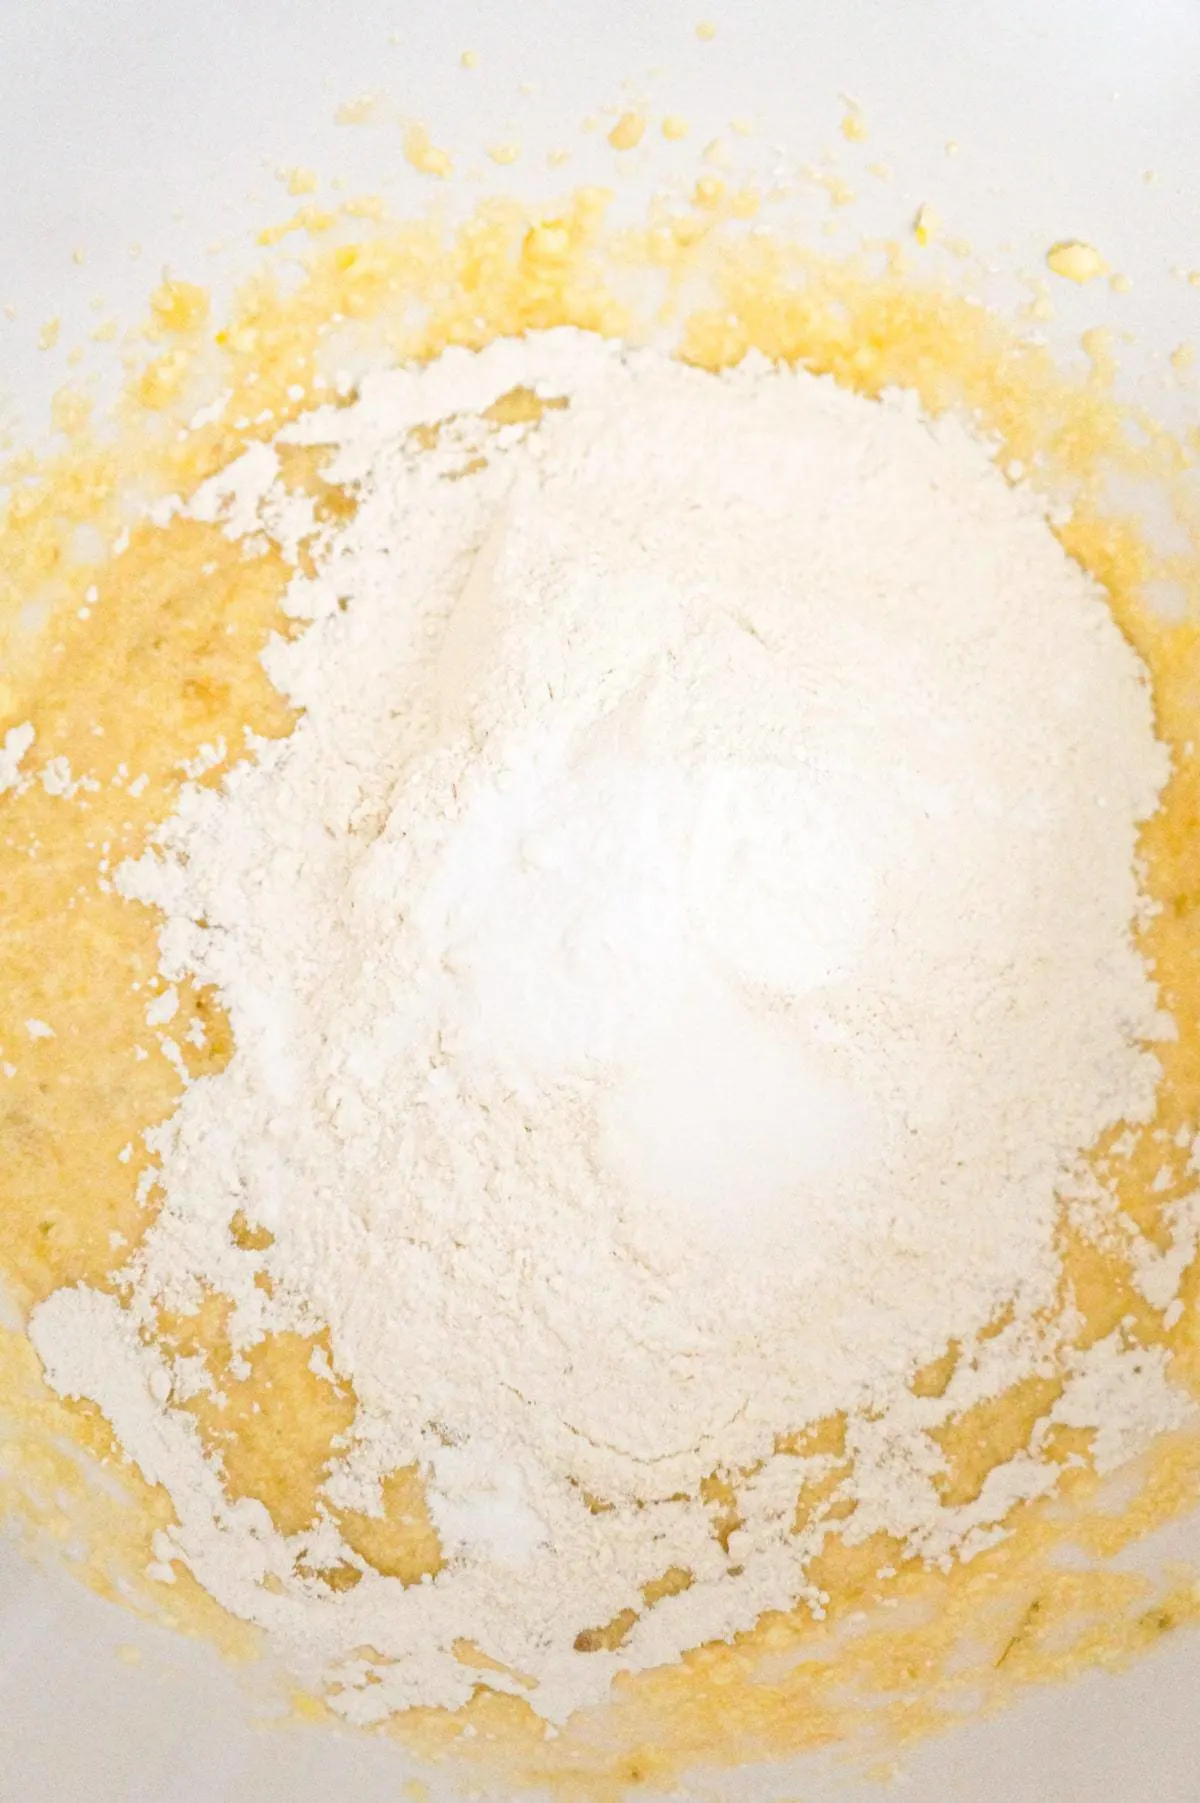 flour, baking powder, baking soda and salt on top of a creamy banana mixture in a mixing bowl